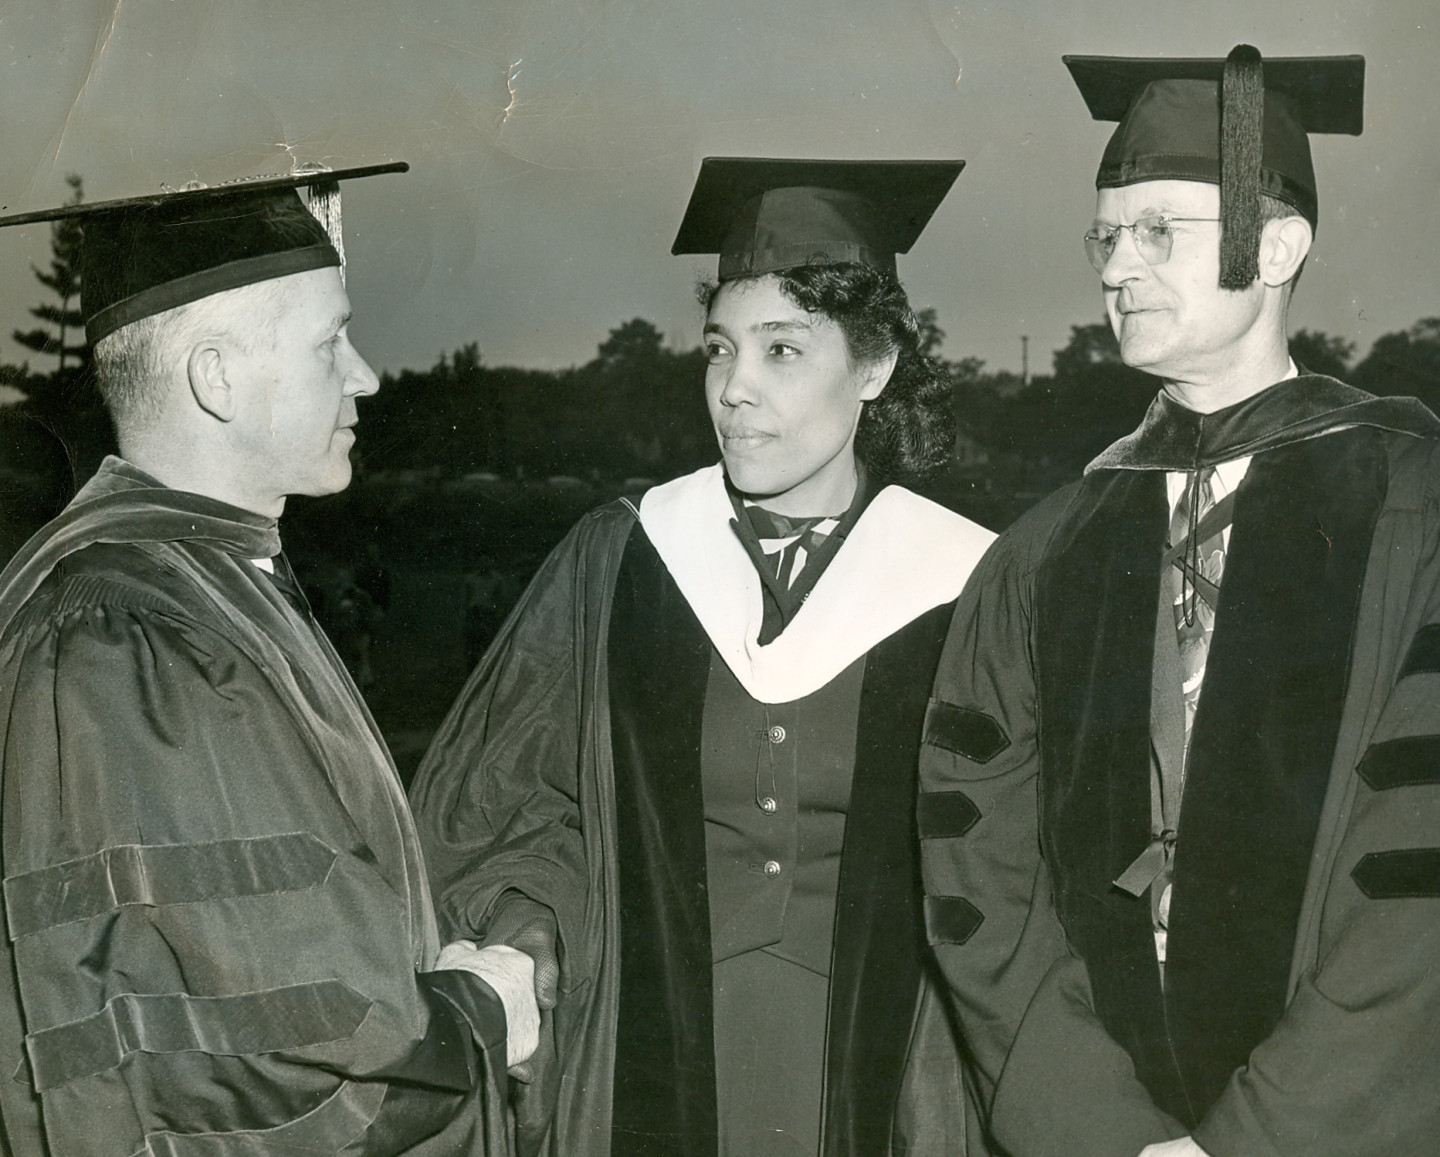 A black and white photo of three people in graduation regalia.